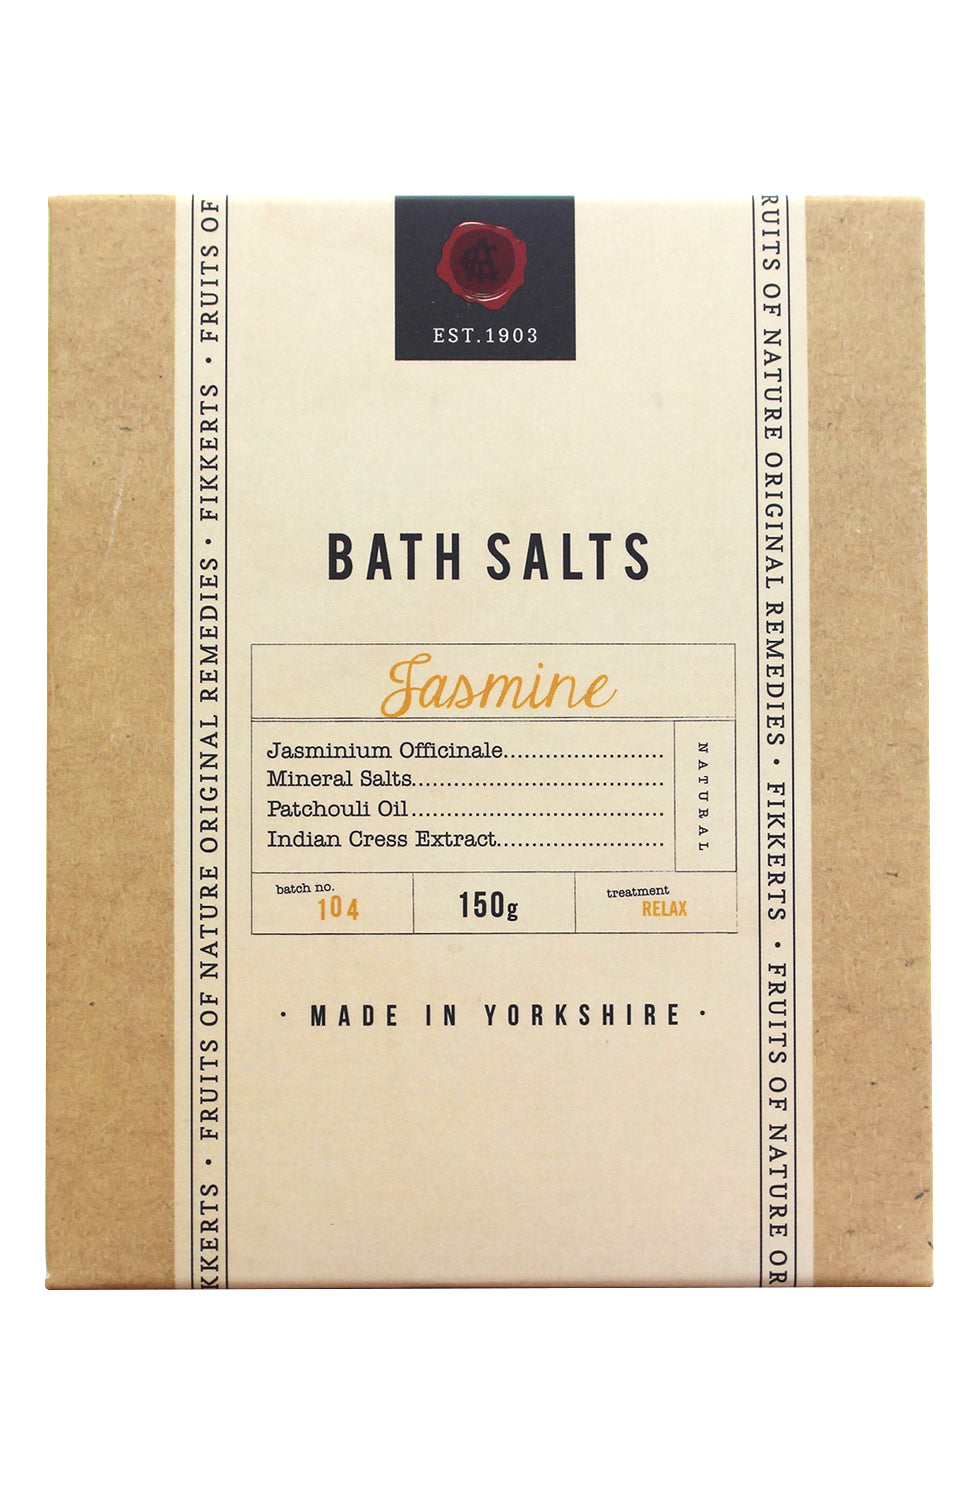 Jasmine bath salts